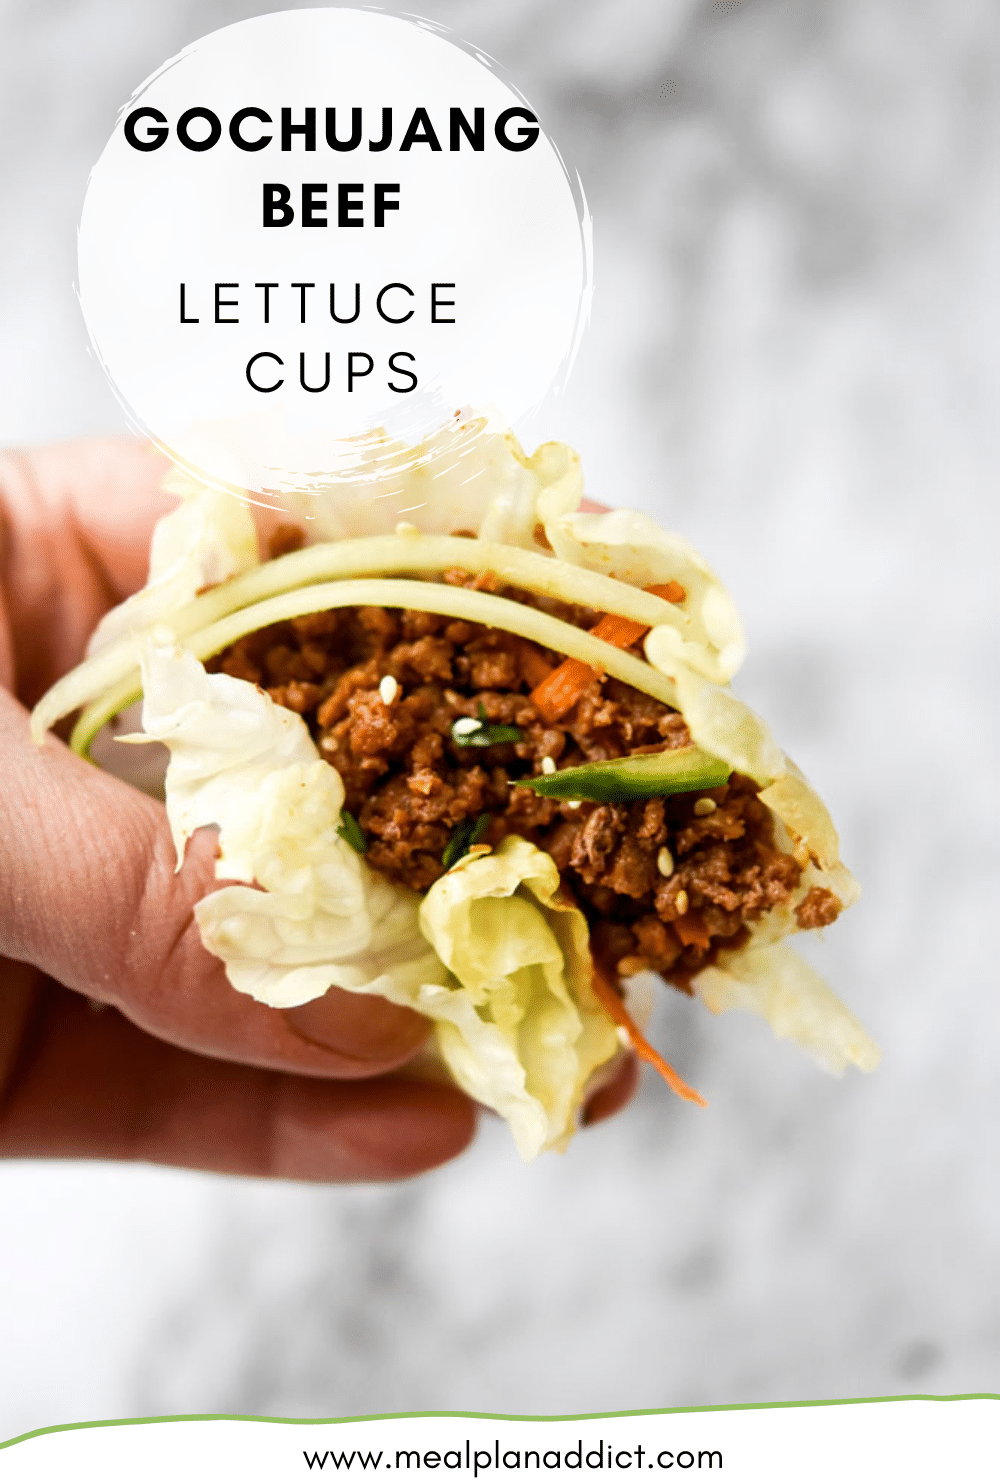 Gochujang Beef Lettuce Cups